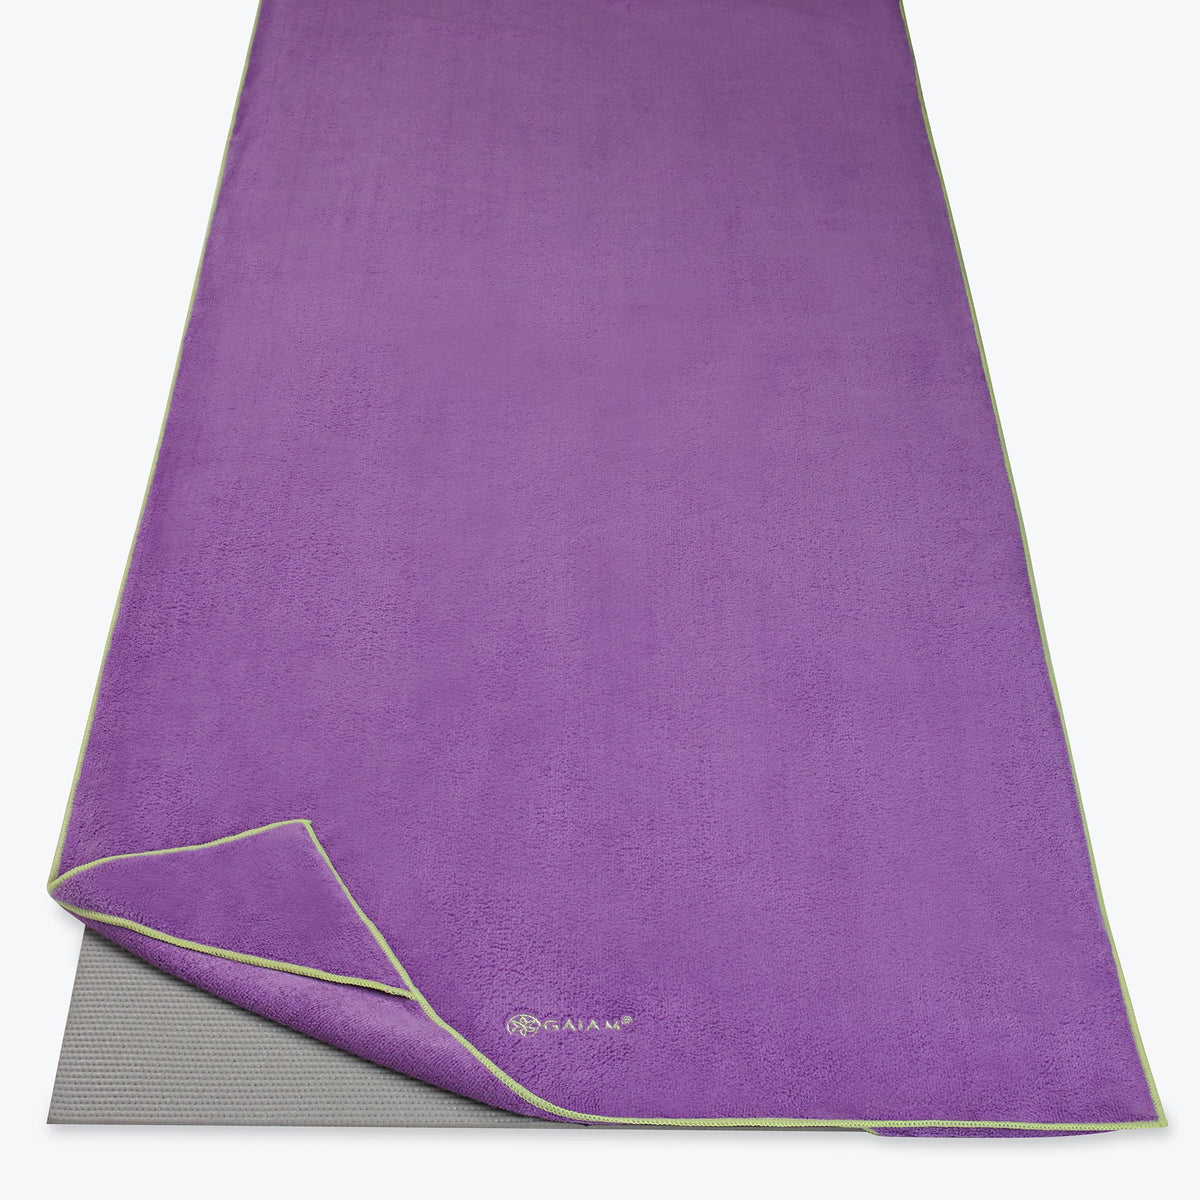 Stay-Put Yoga Towel on mat